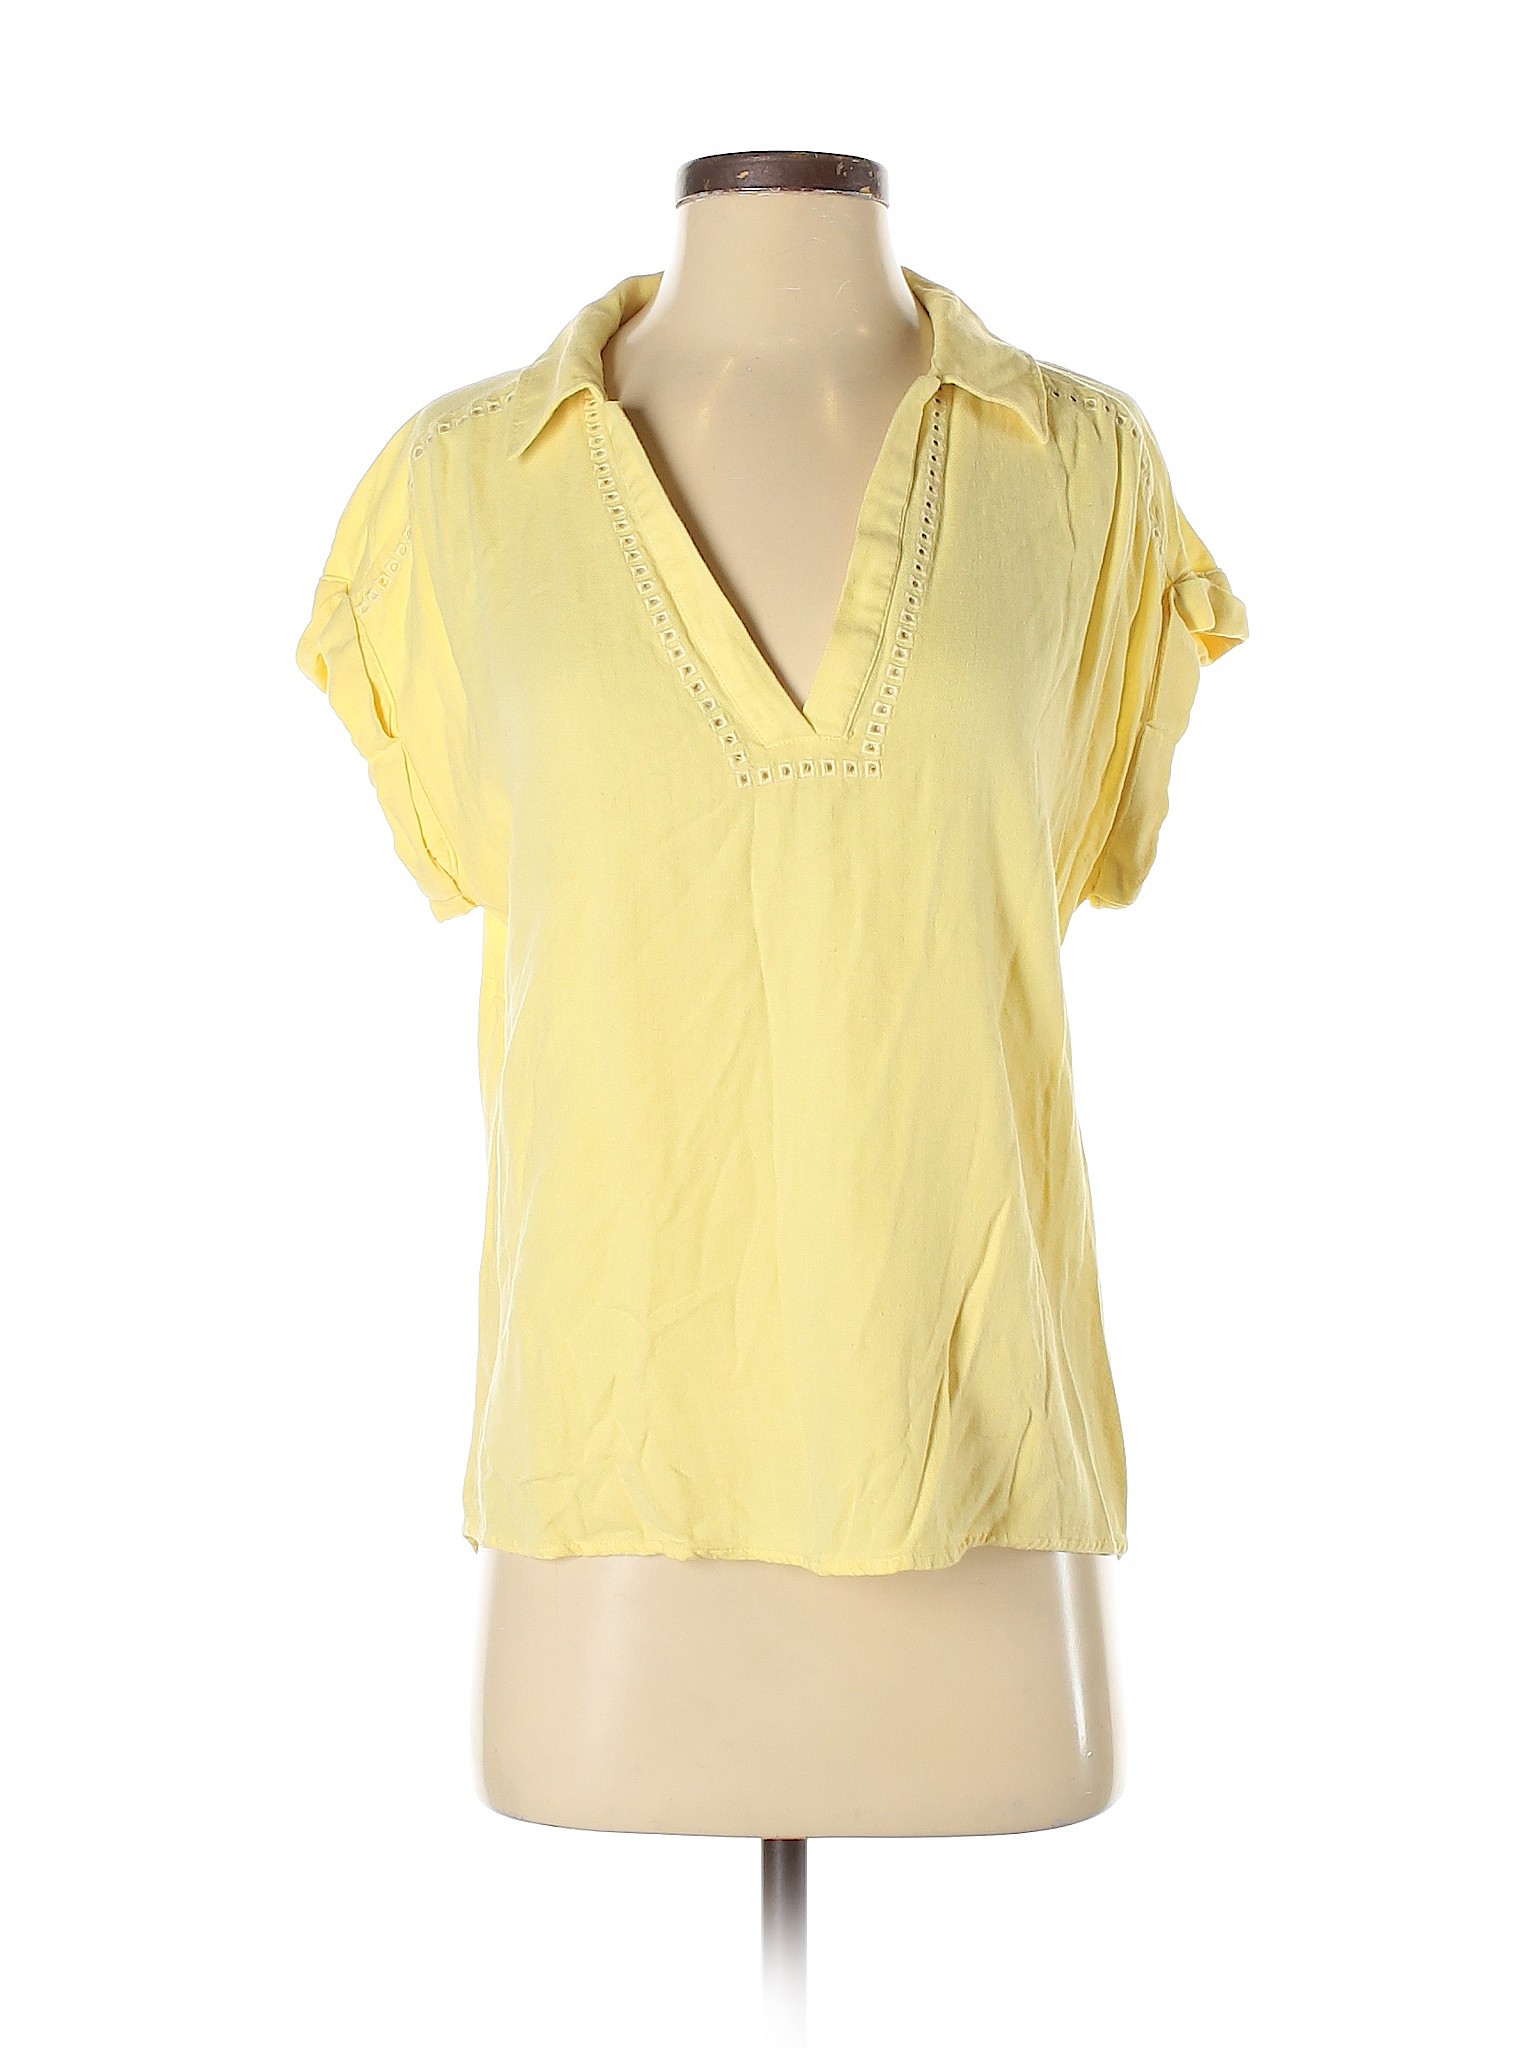 &.Layered Women Yellow Short Sleeve Blouse S | eBay